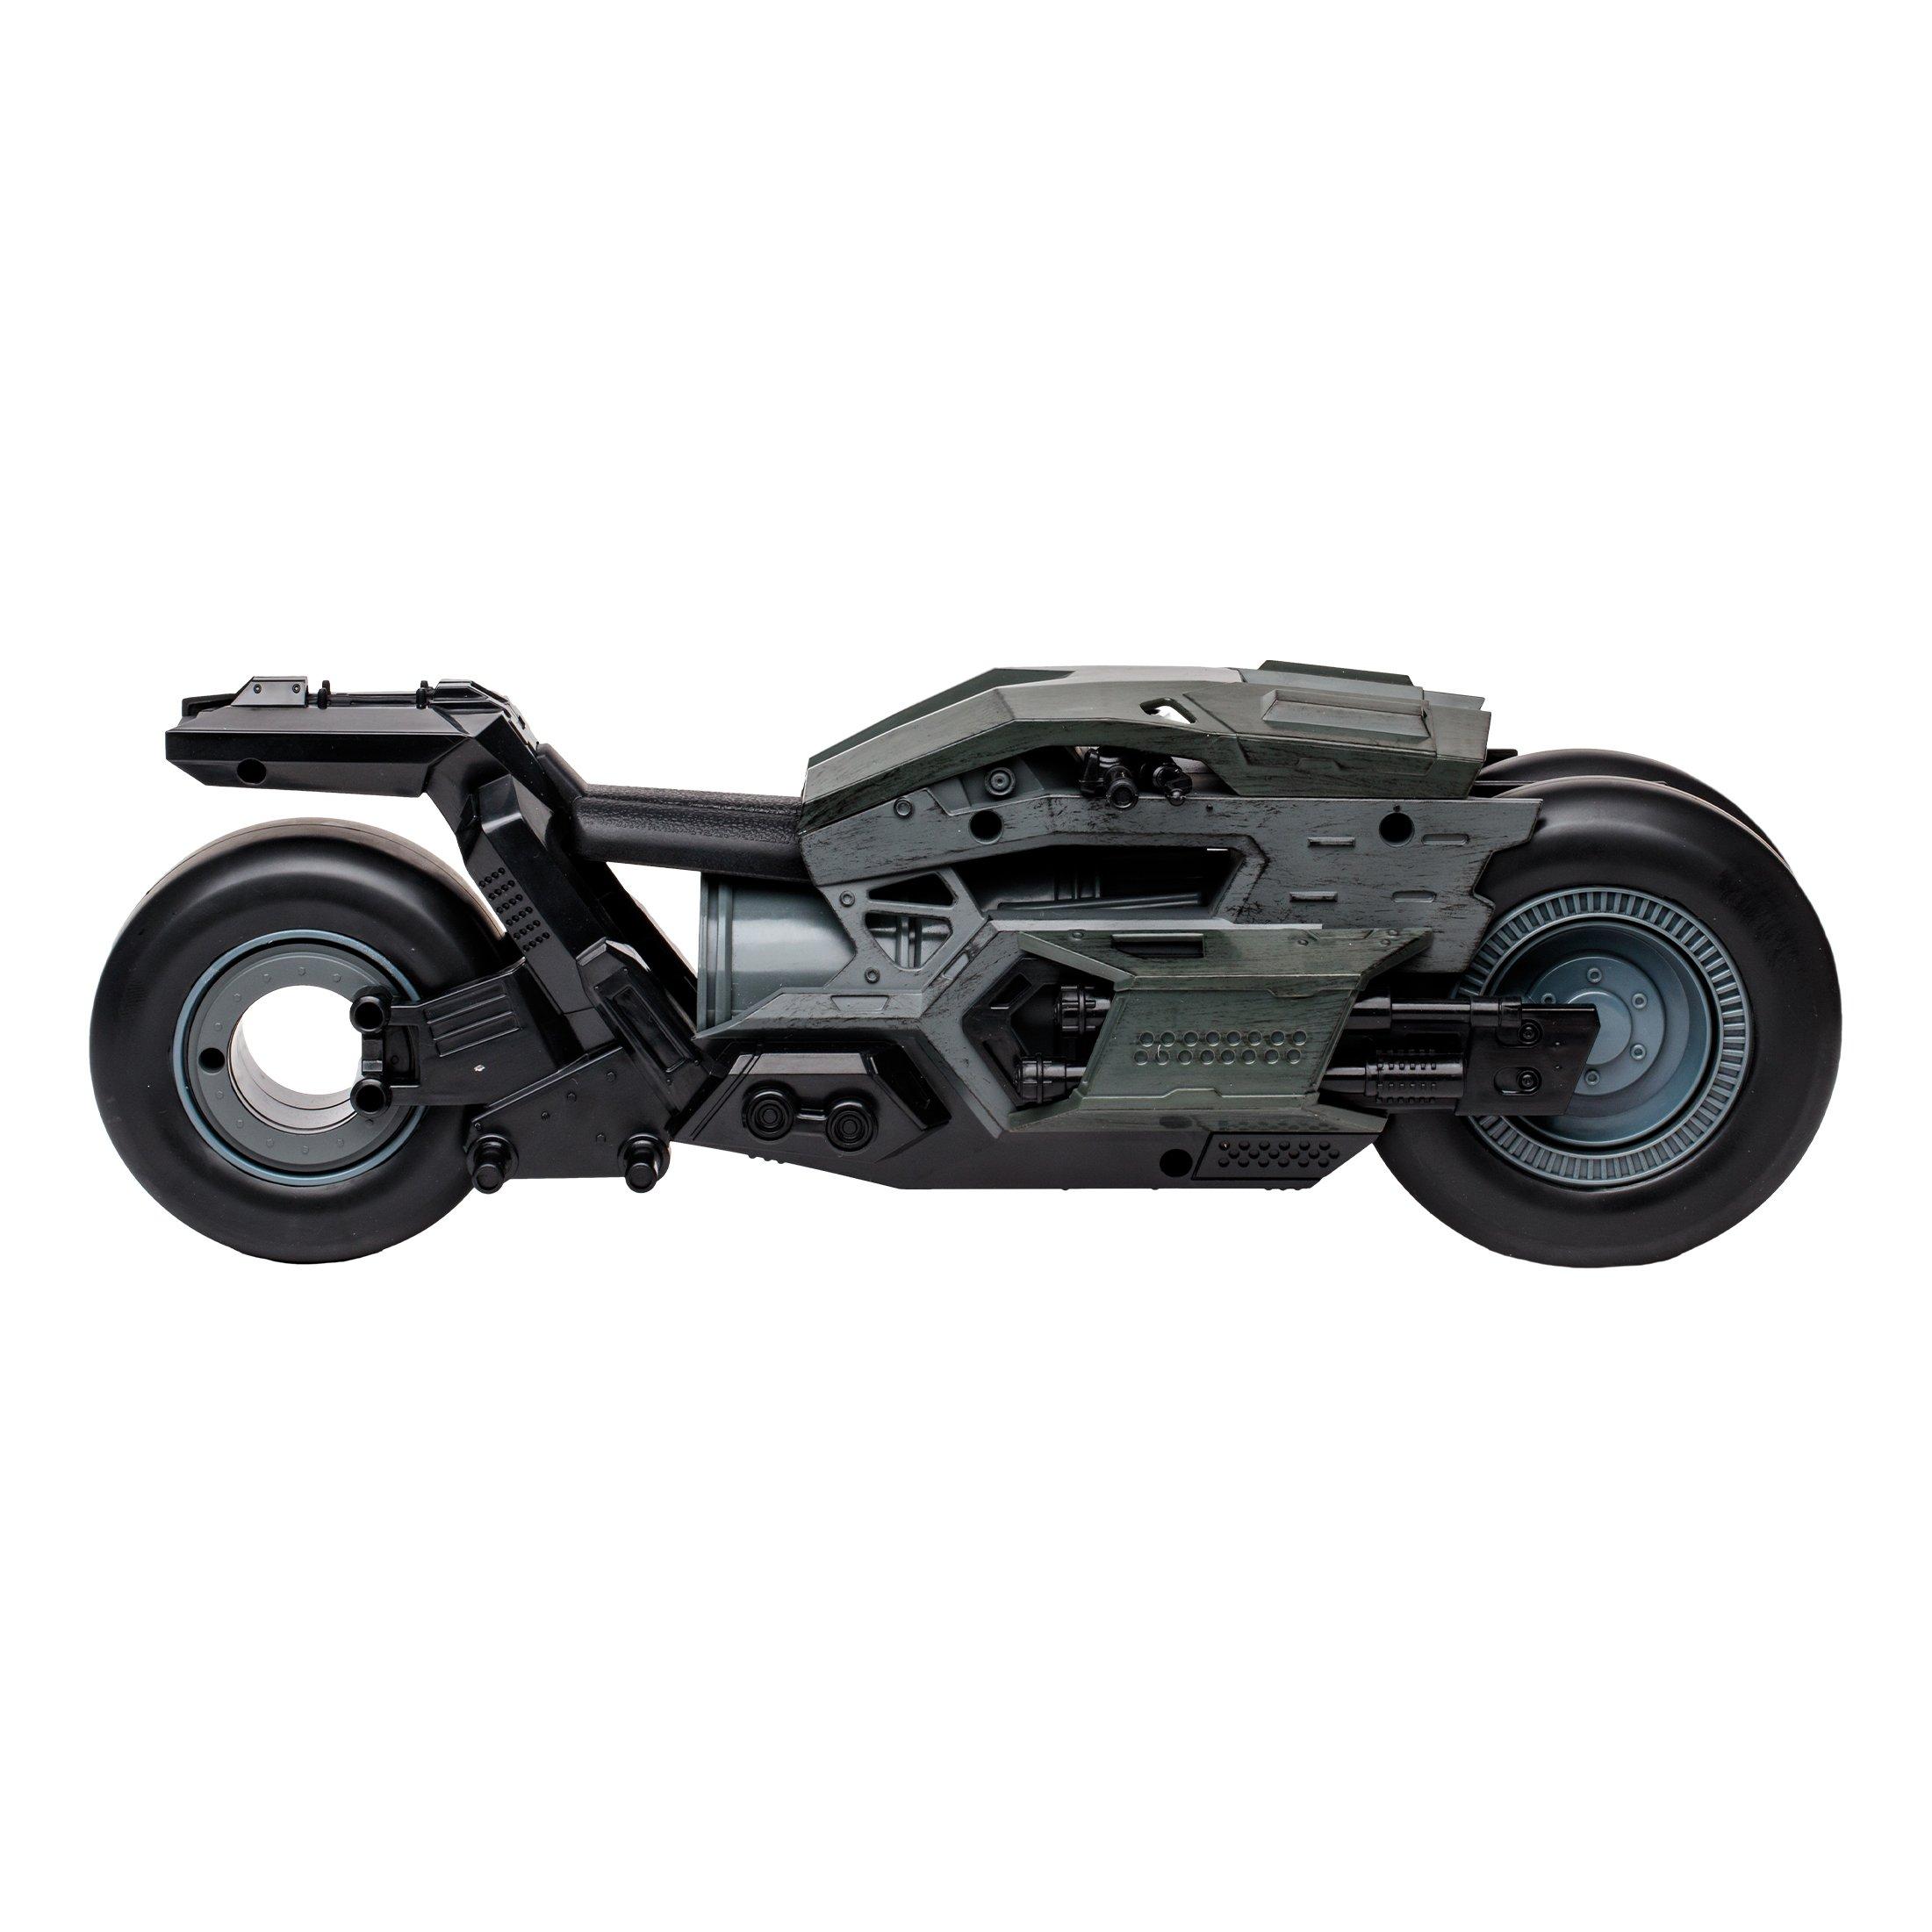 McFarlane Toys DC Multiverse The Flash Batcycle Action Figure